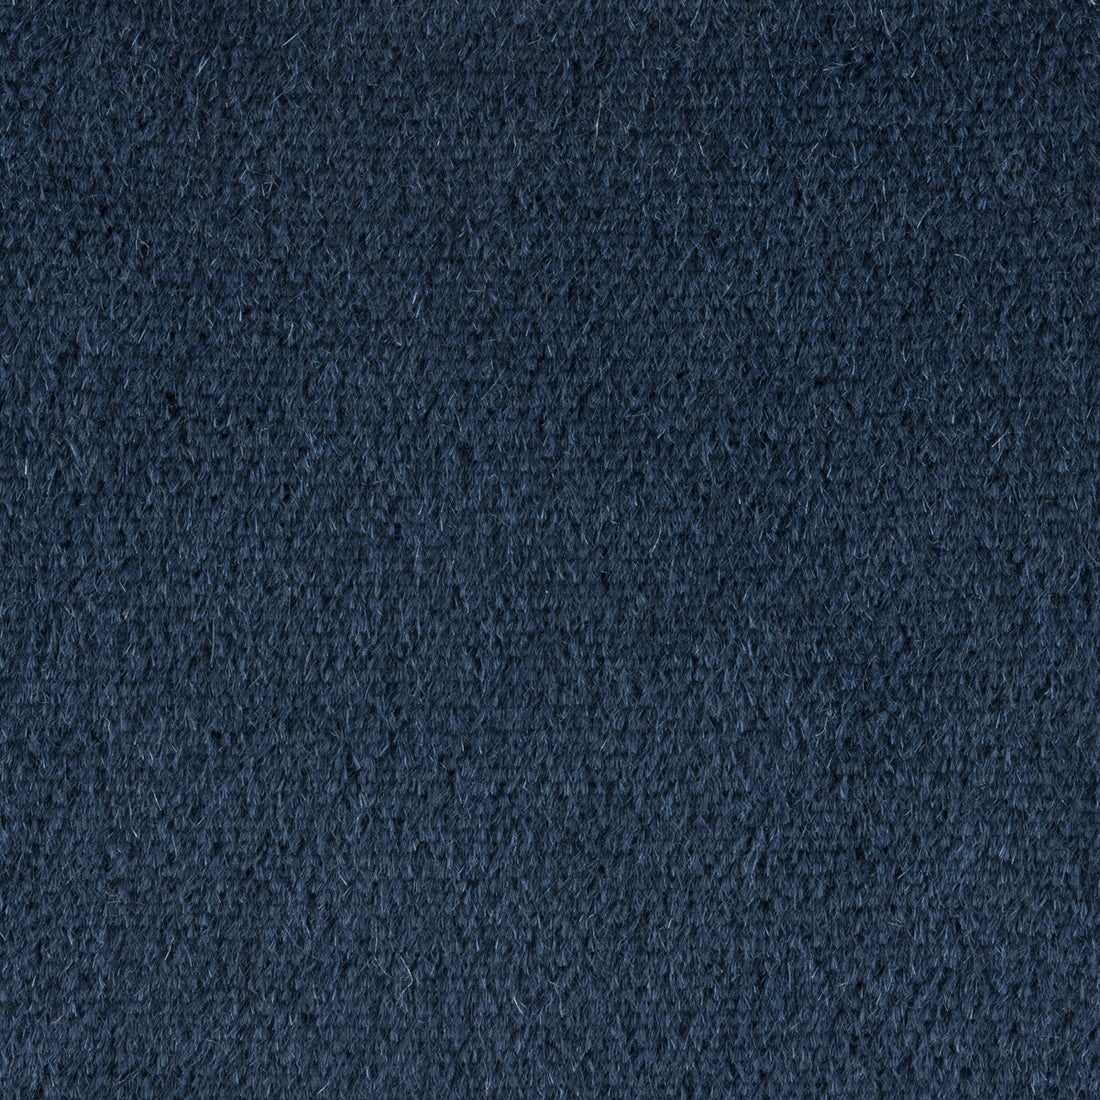 Autun Mohair Velvet fabric in indigo color - pattern BR-89778.282.0 - by Brunschwig &amp; Fils